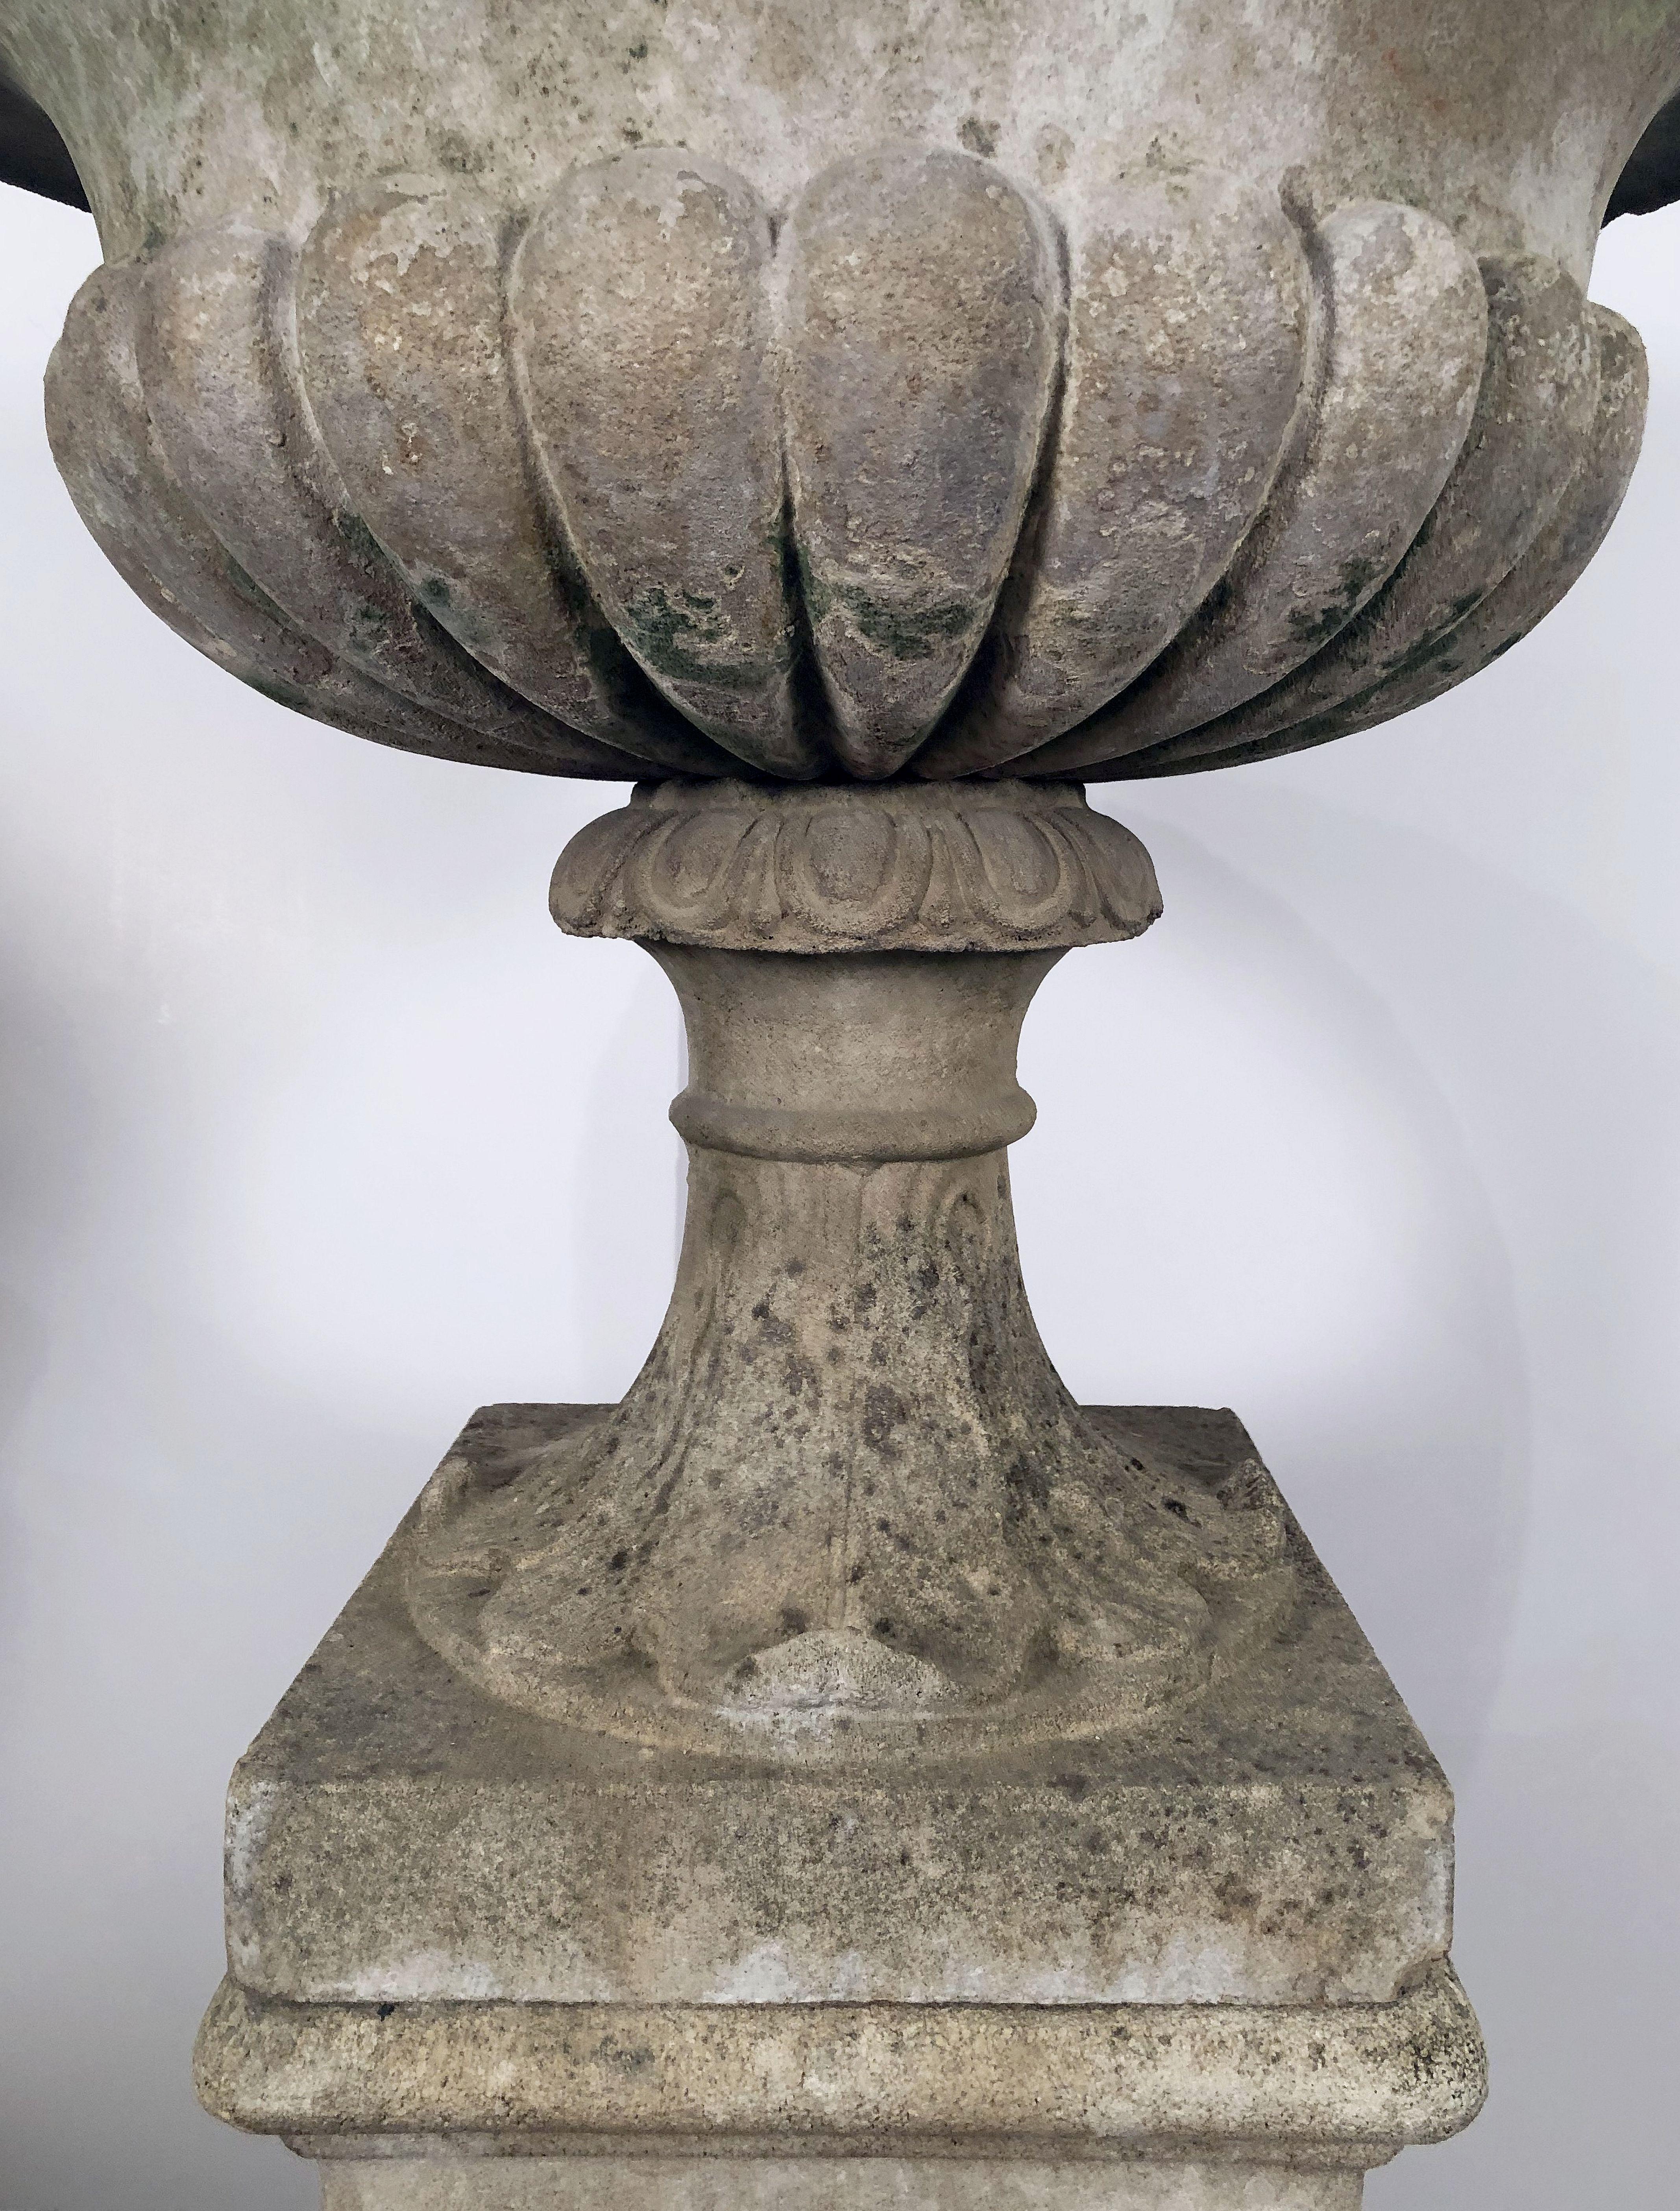 Cast Stone Large English Garden Stone Urn or Planter Pot on Plinth or Pedestal